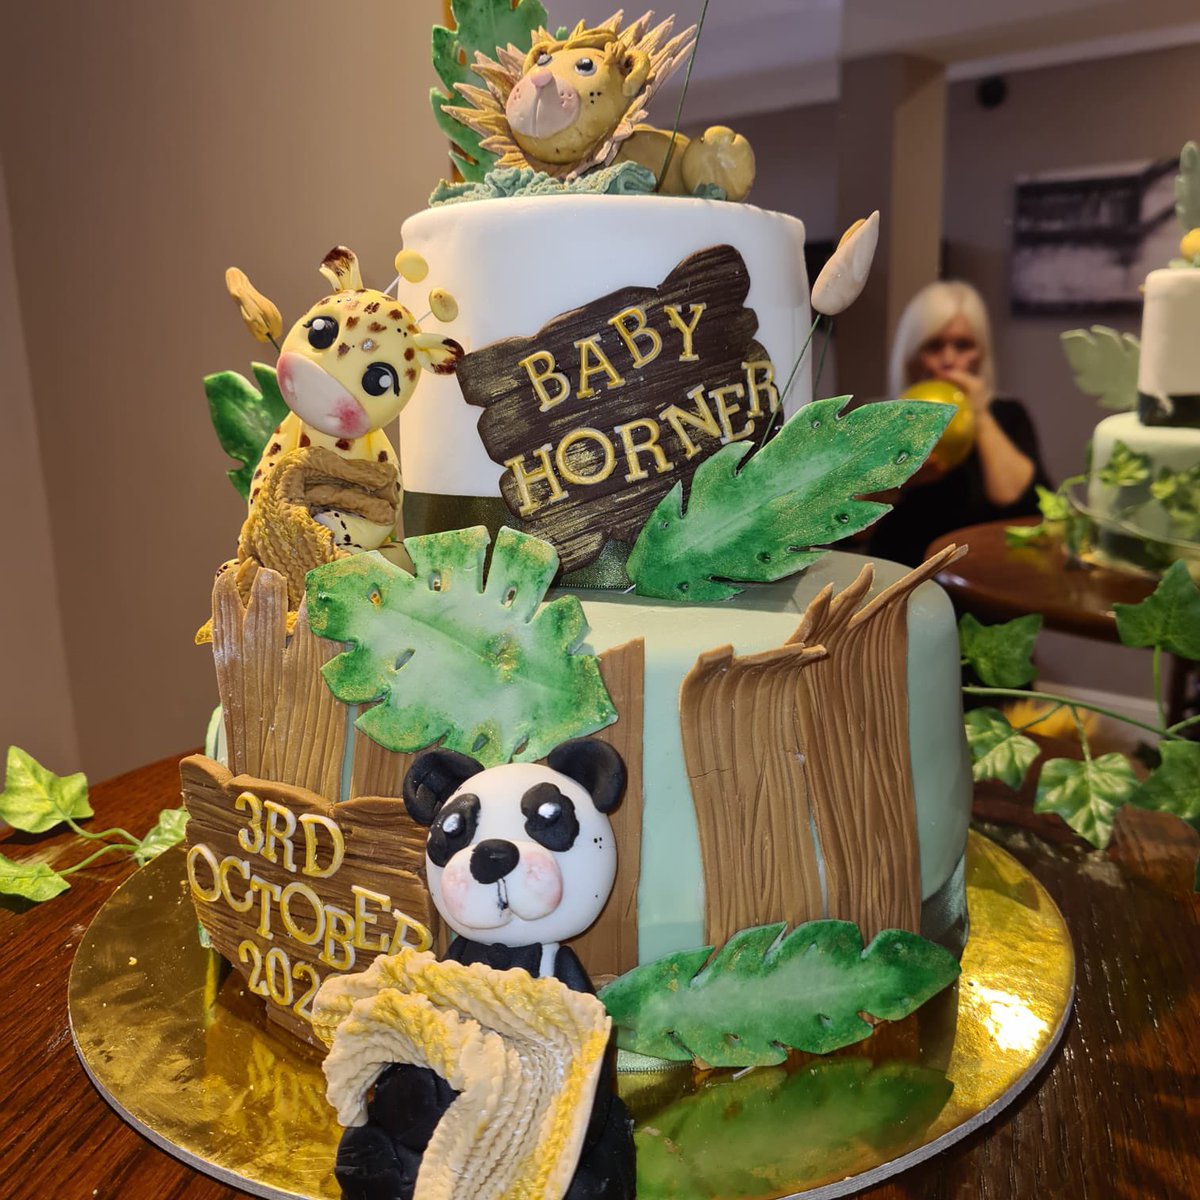 Baby Shower Cake for my 
loves🦒🐅🐼🎂👶🏻💙 
#safari #animals #cake #cakeart #cakedesign #cakedecorator #babyshower #itsaboy #baker #baking #homemade #handmade #sugarcraft #fondant #cakes #celebration #family #cakedecorating #spongecake #lion #giraffe #panda #cakedesigner